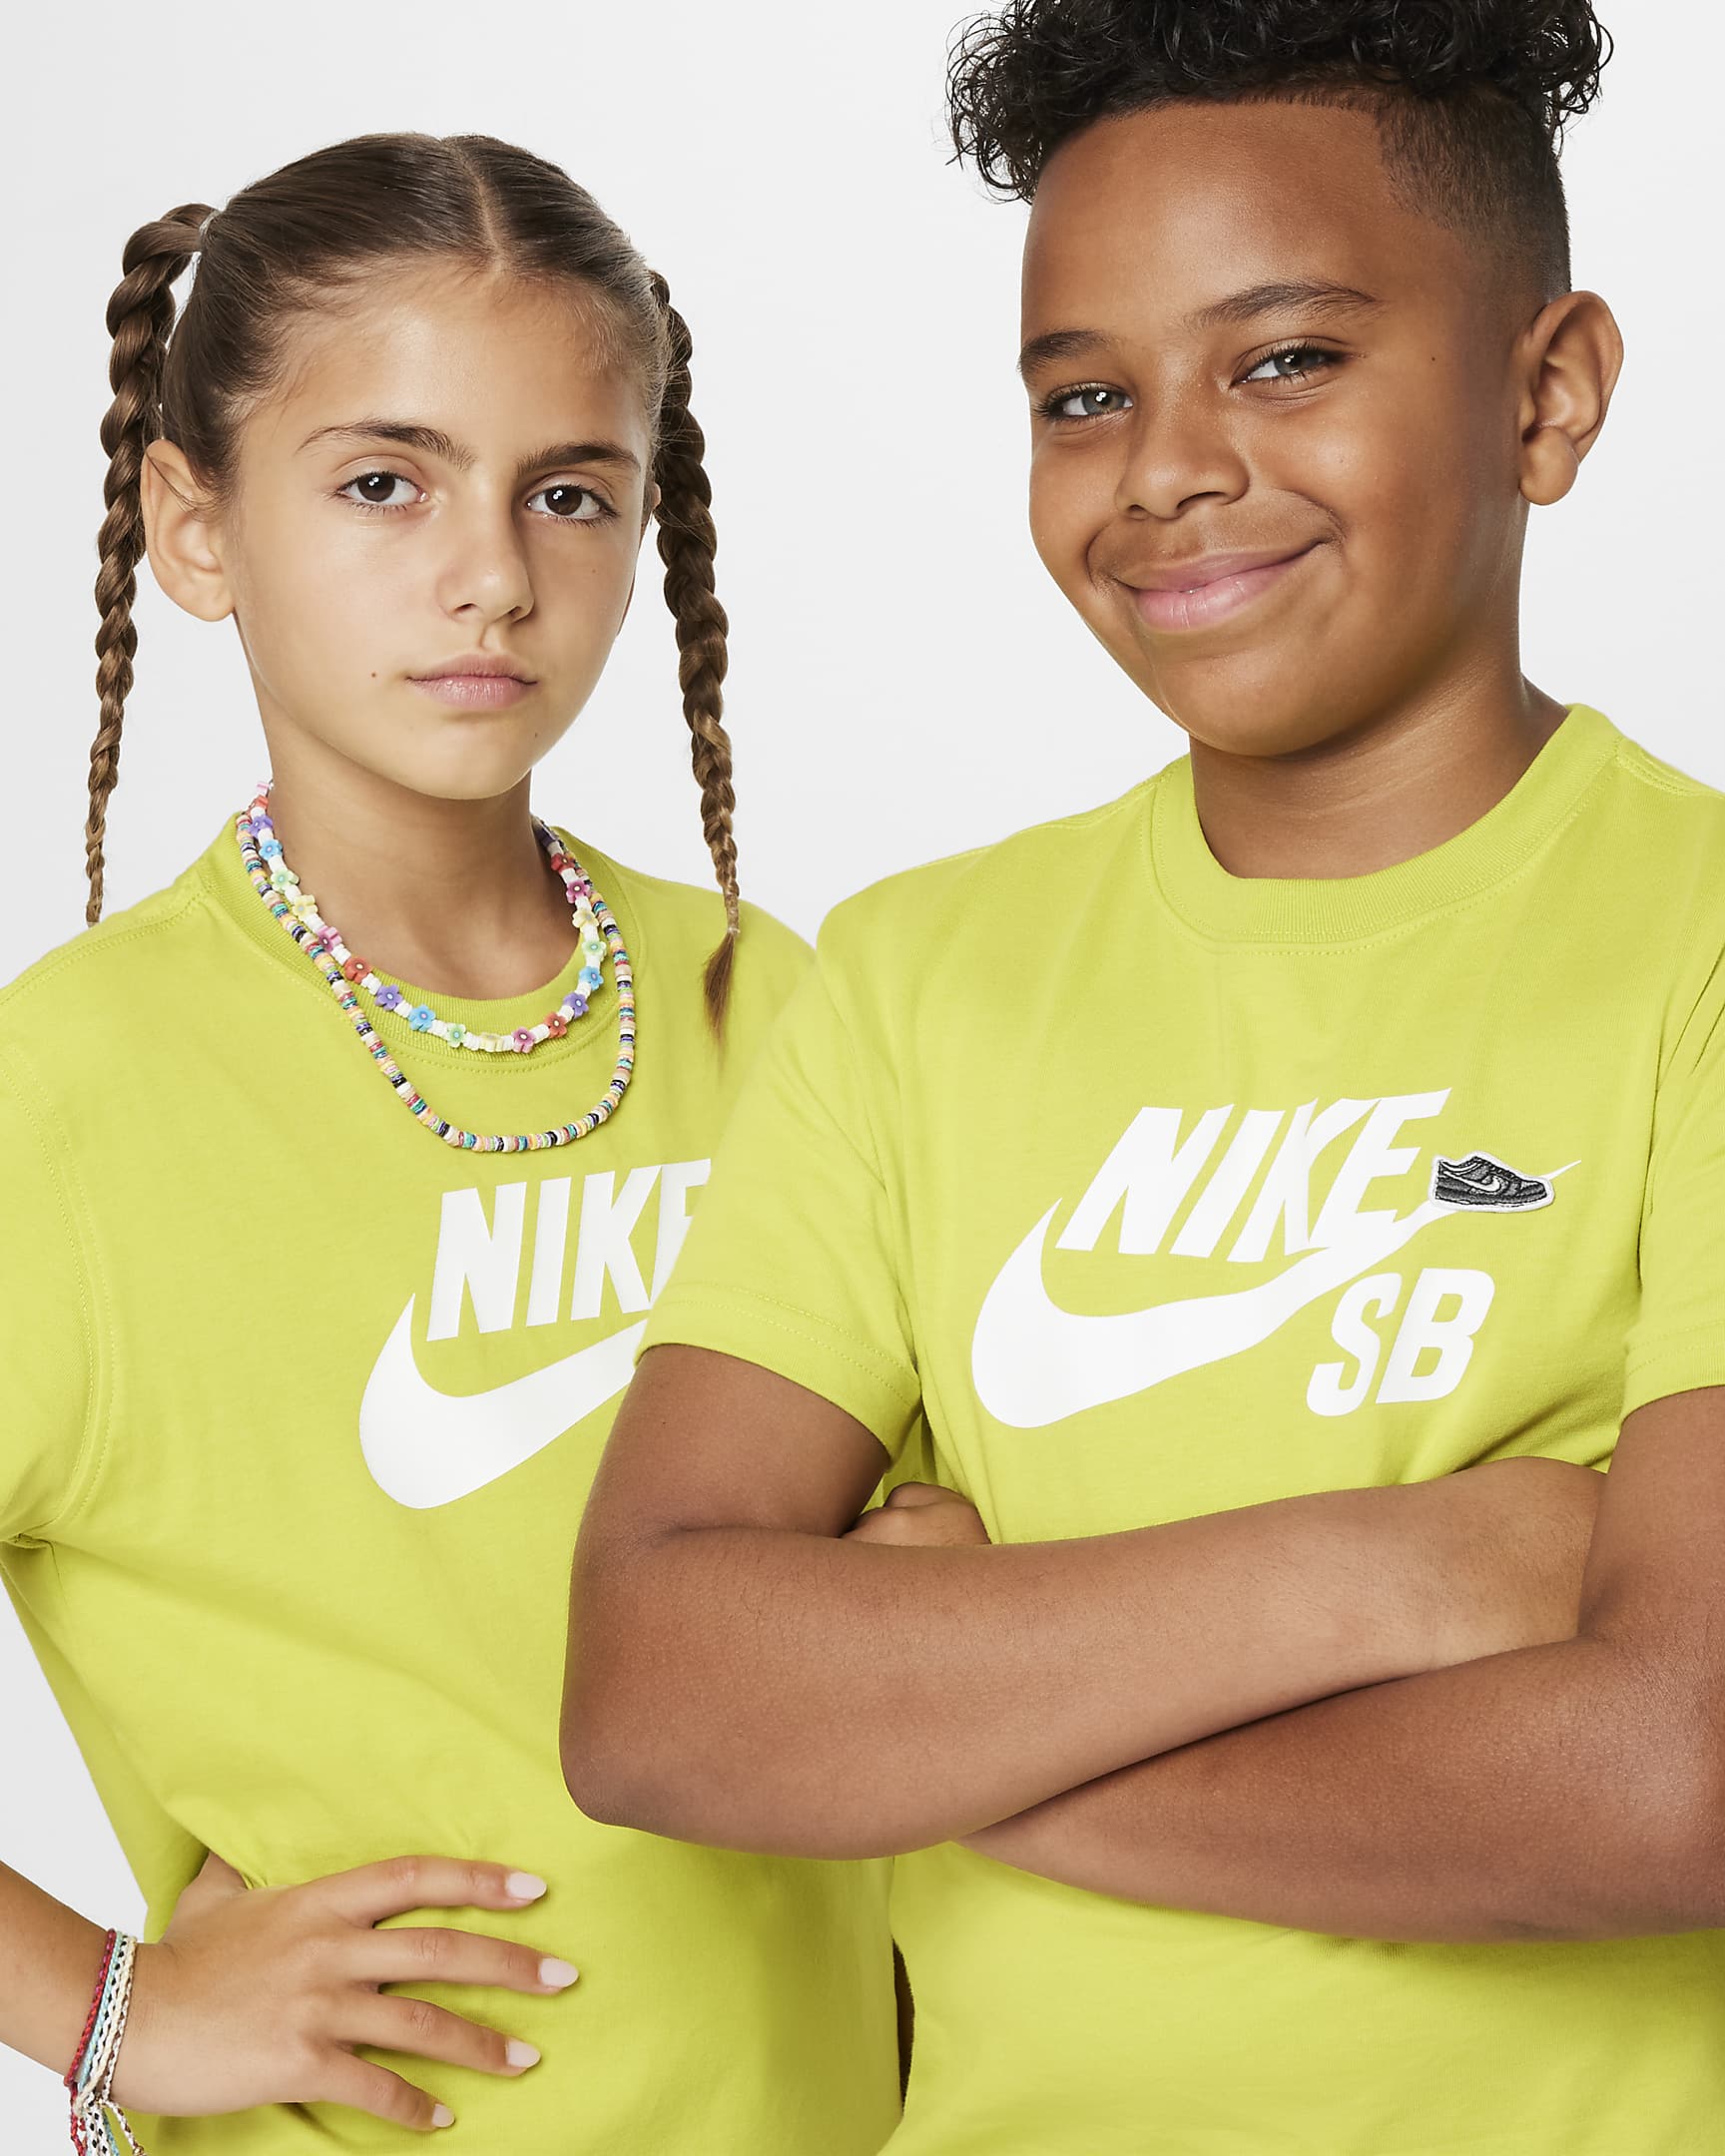 Nike SB T-Shirt für ältere Kinder - Bright Cactus